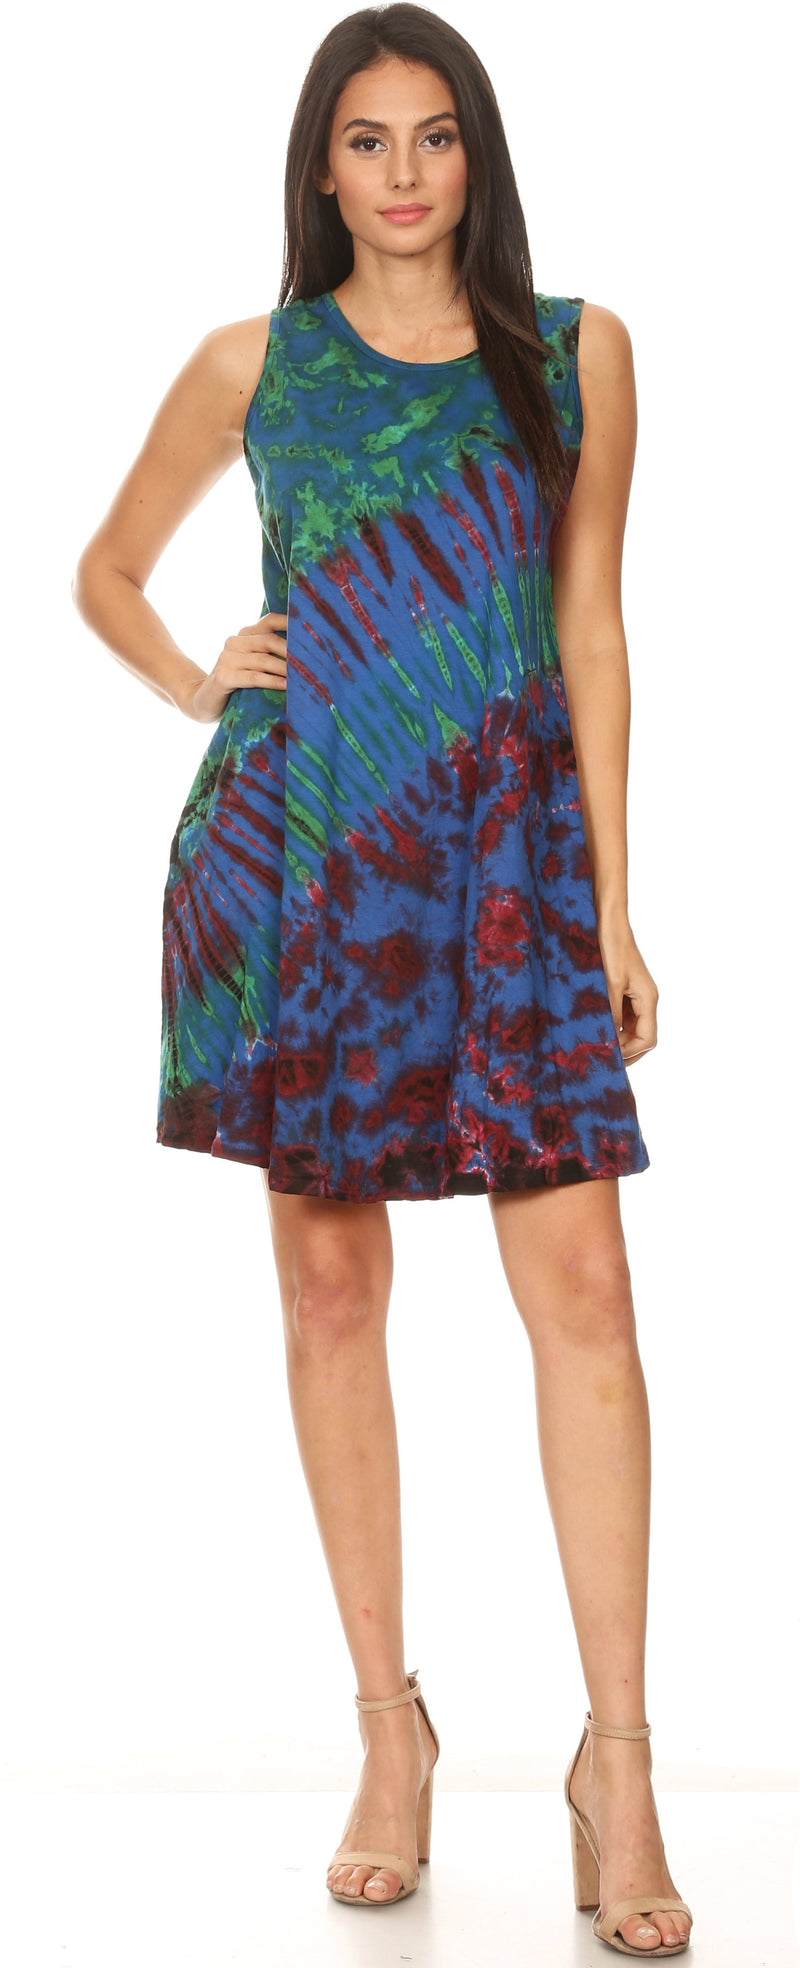 Sakkas Dora Women's Sleeveless Knit Loose Casual Shift Print Tank Dress Sundress